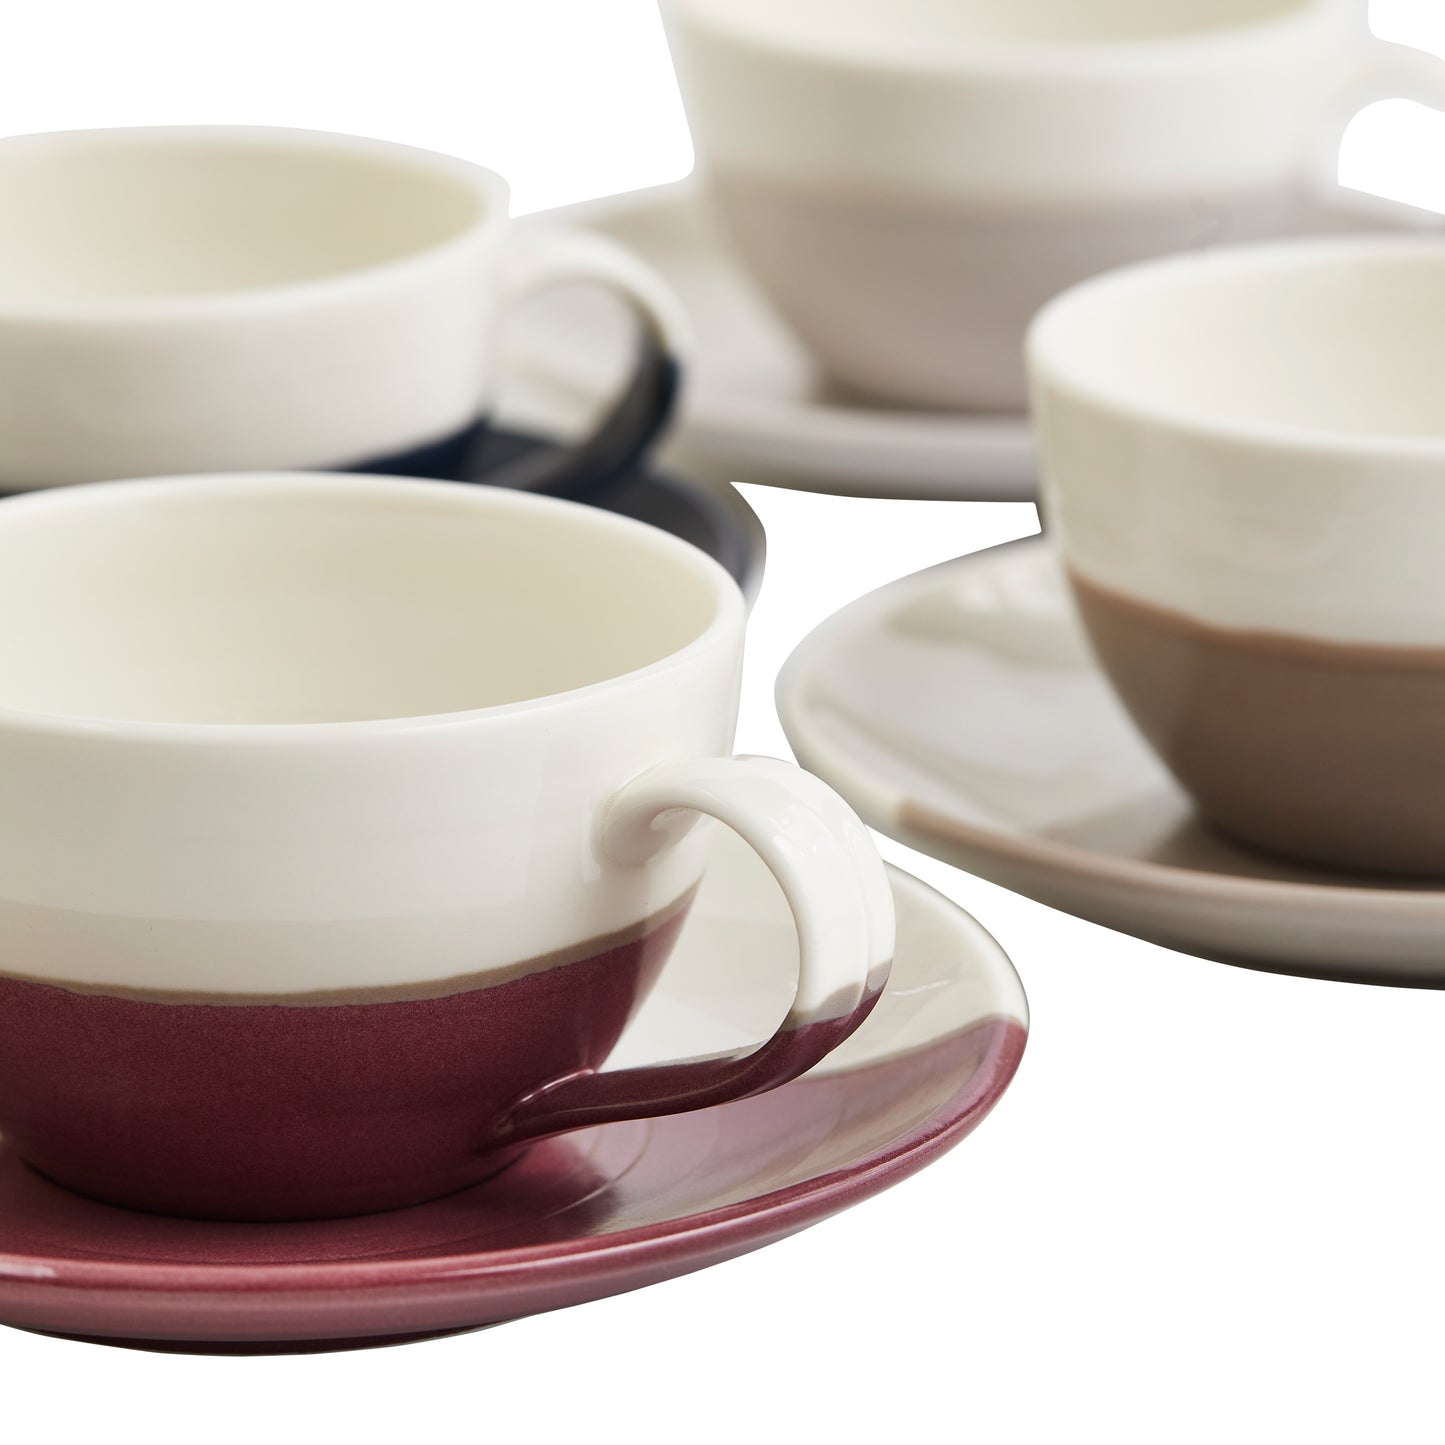 Royal Doulton 1815 Coffee Studio Flat White Cup & Saucer 5.5floz, Set of 4